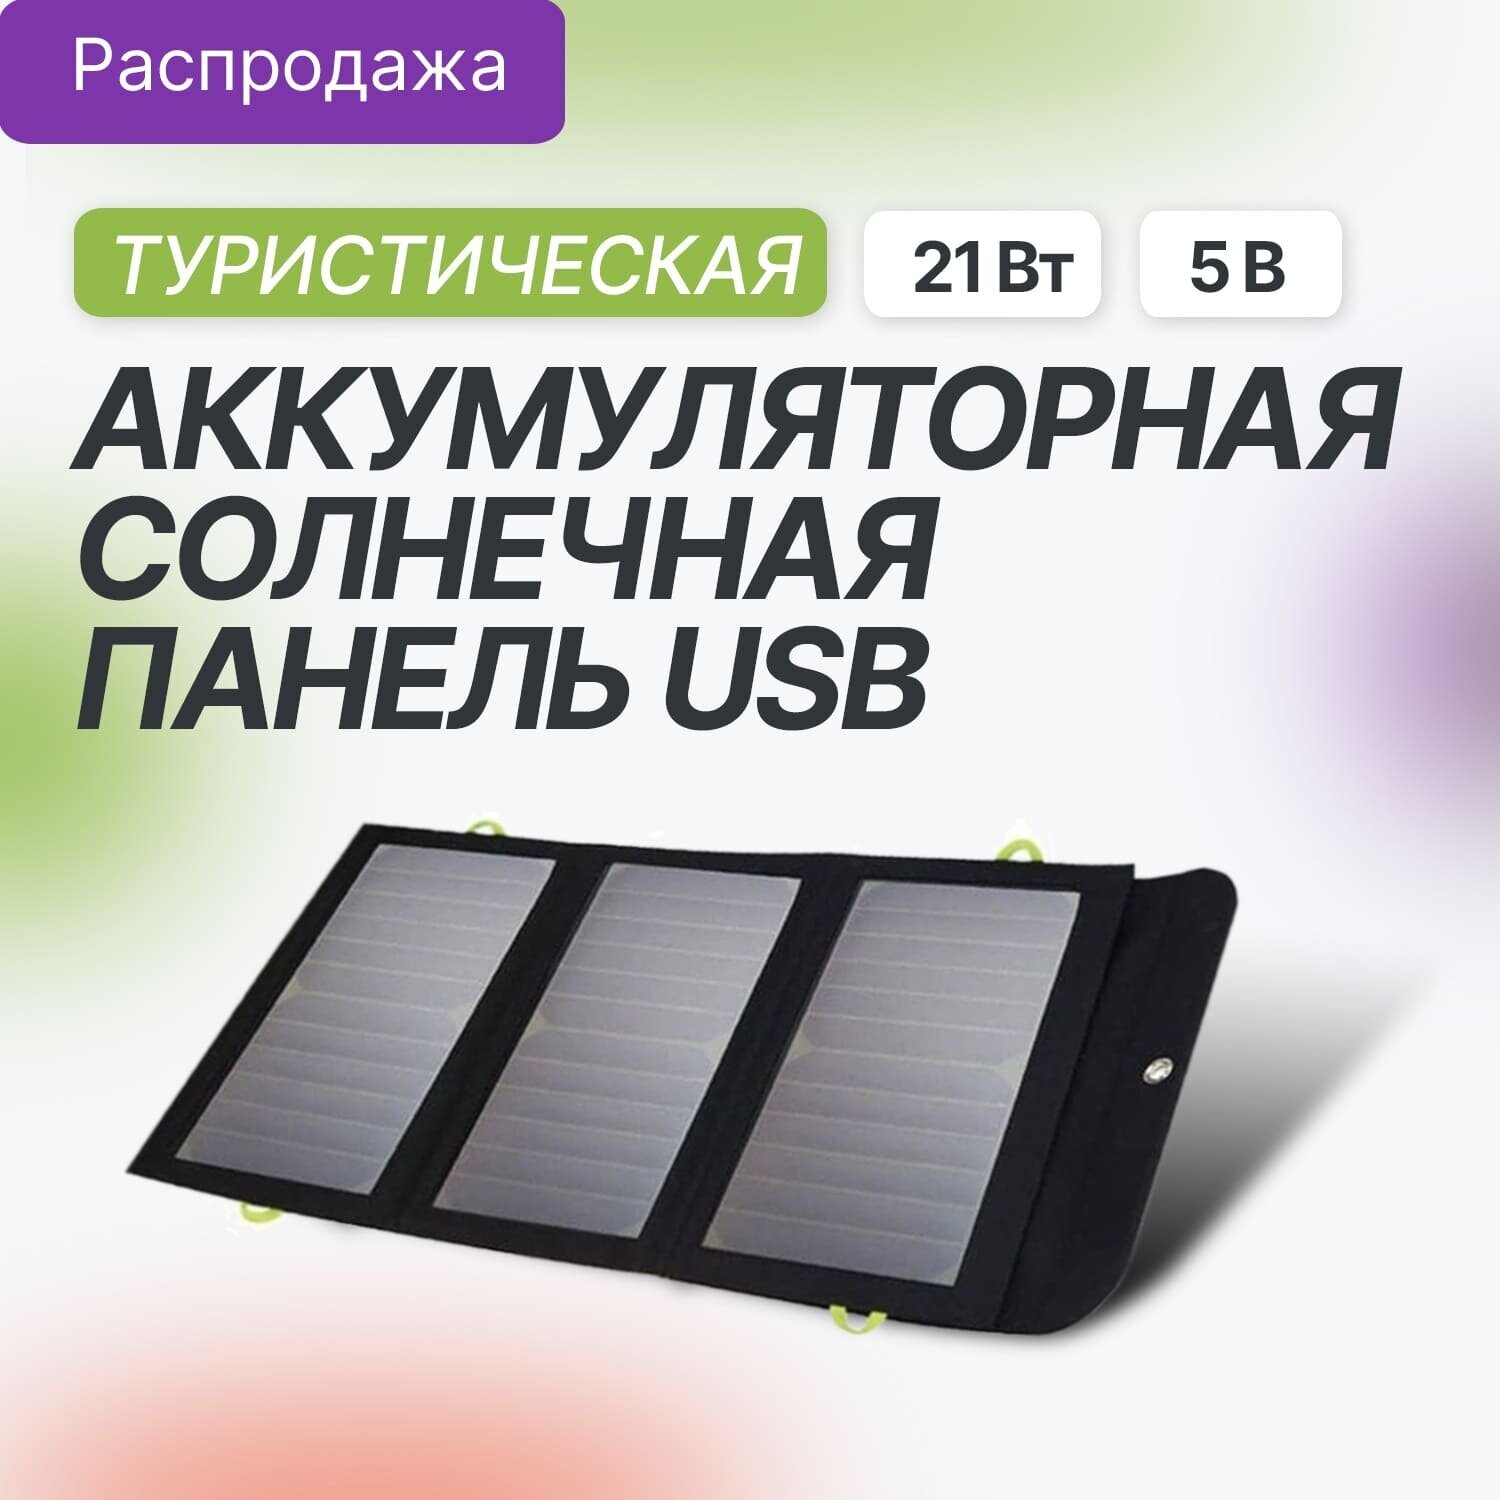 Allpowers 21 Вт Солнечная панель с аккумулятором 10 000 мА*ч